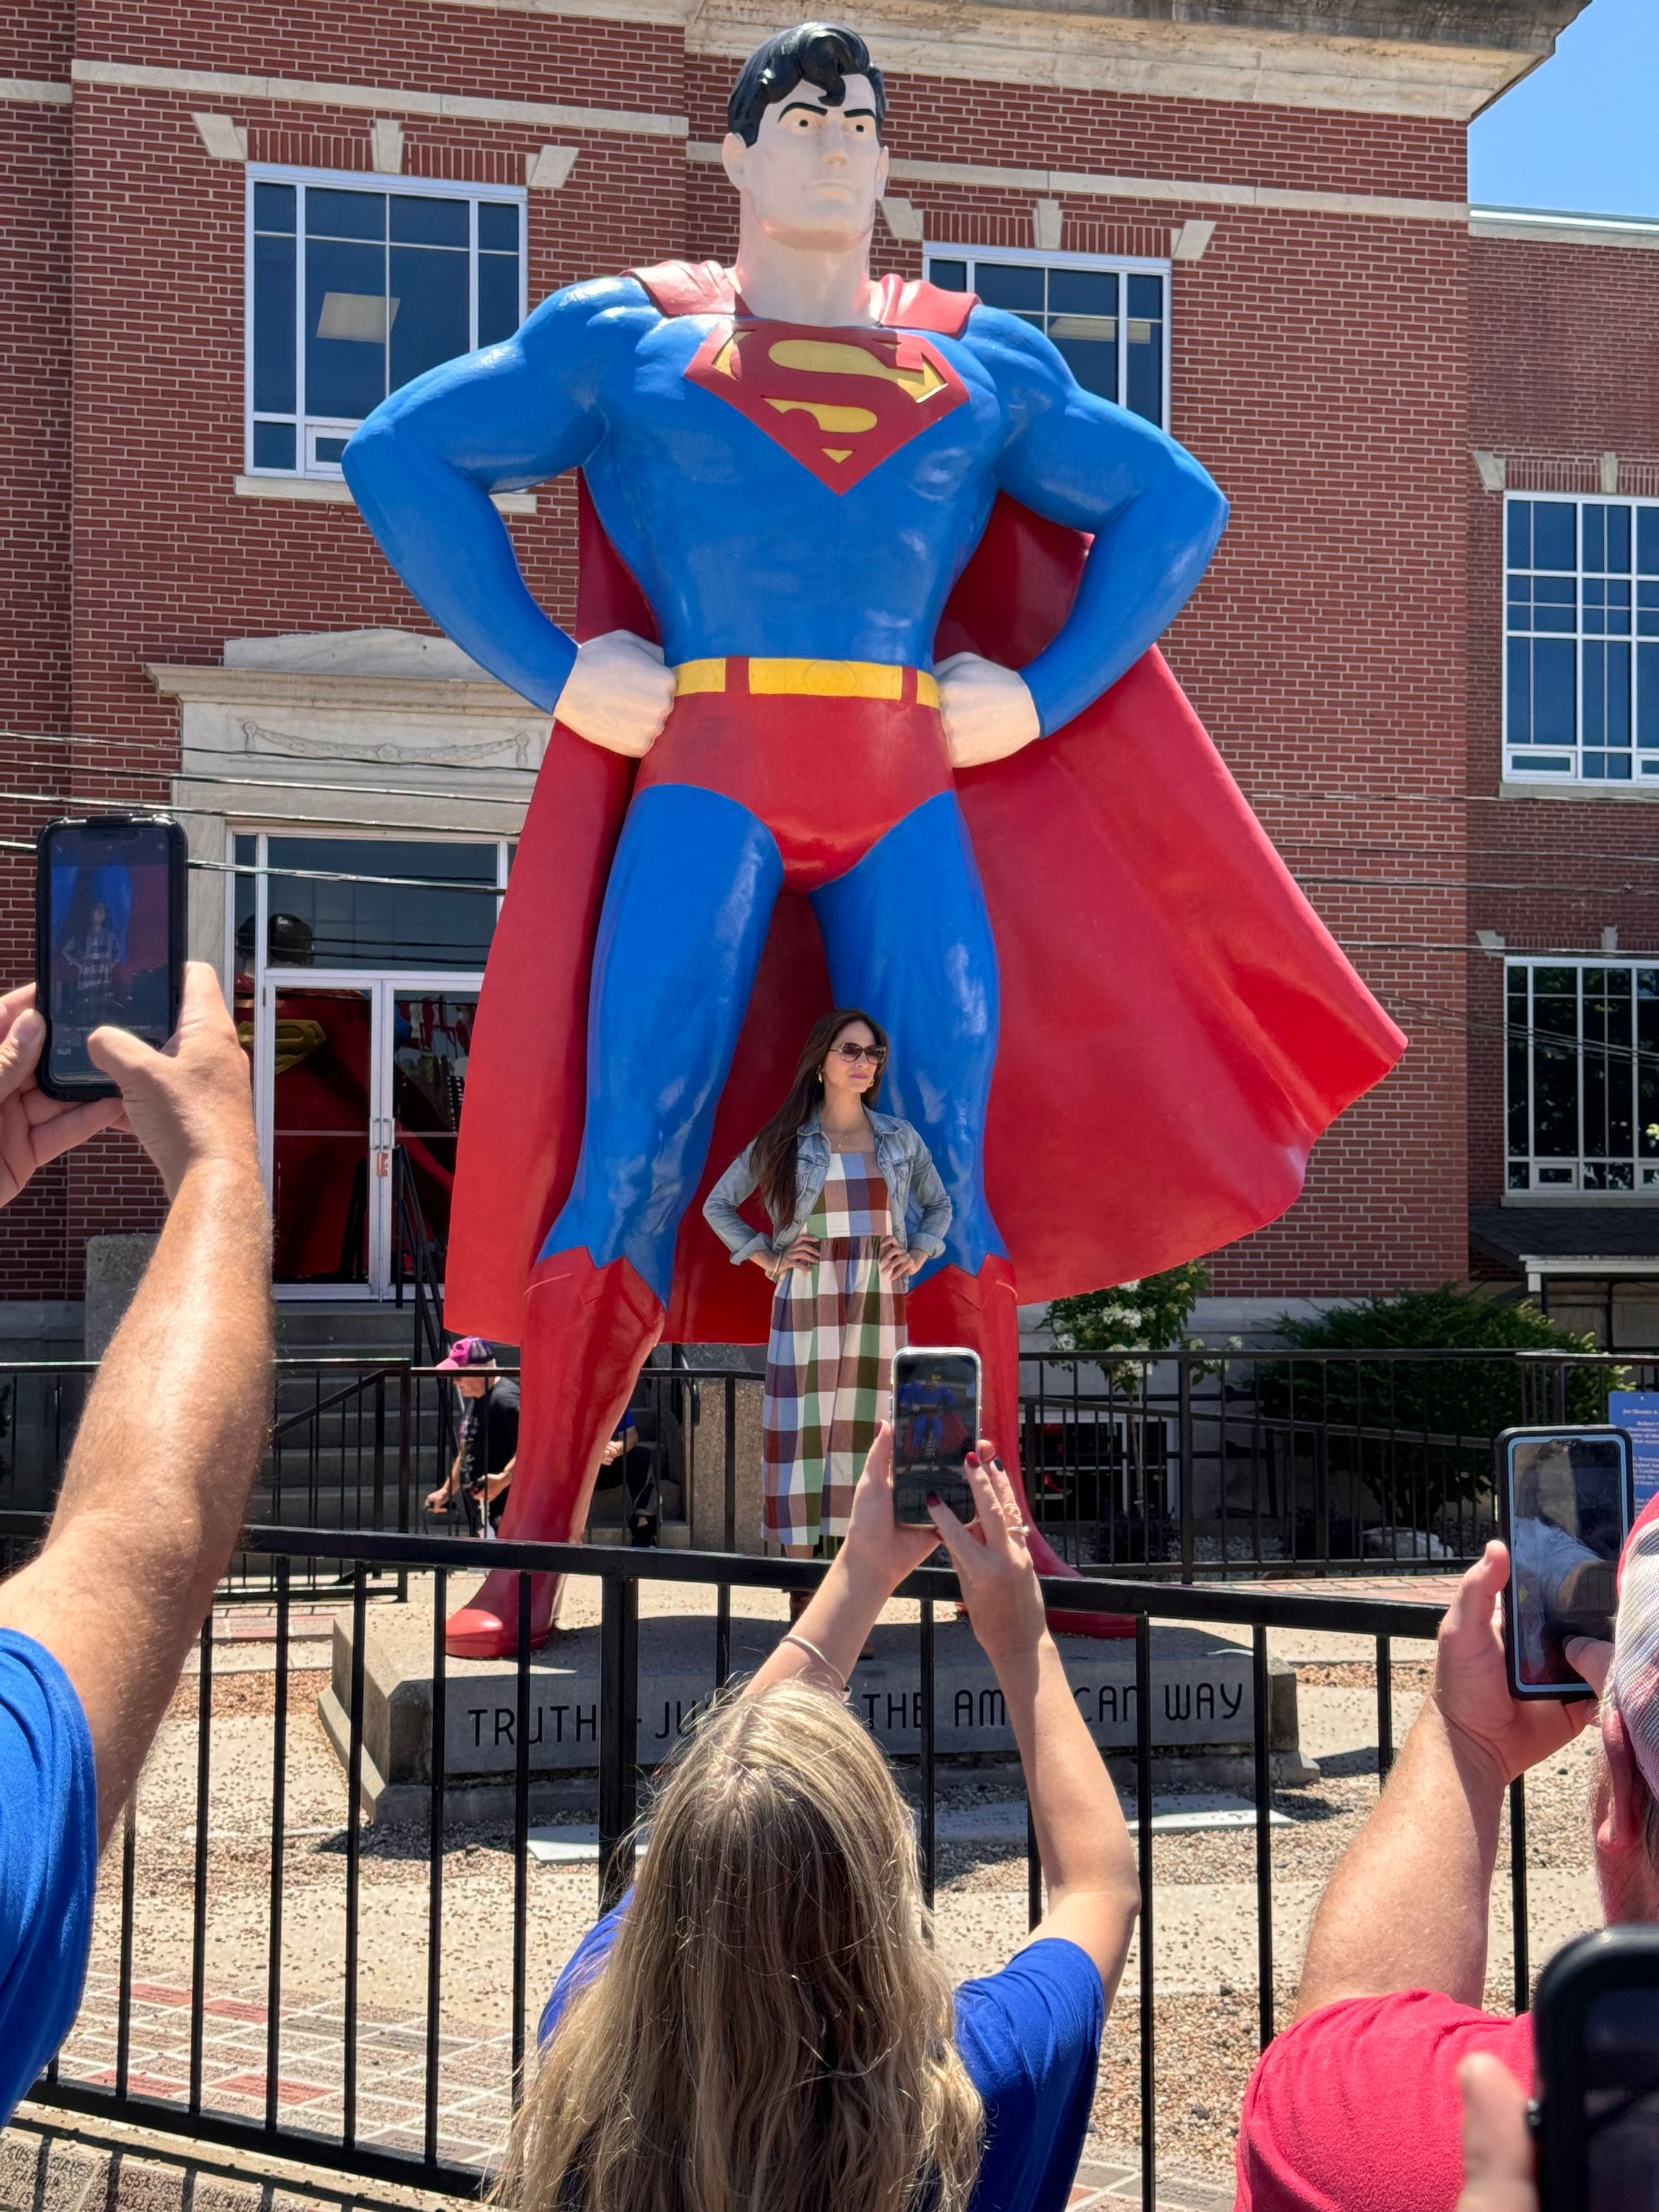 Kristen Kreuk standing in front of the giant Superman status in Metropolis